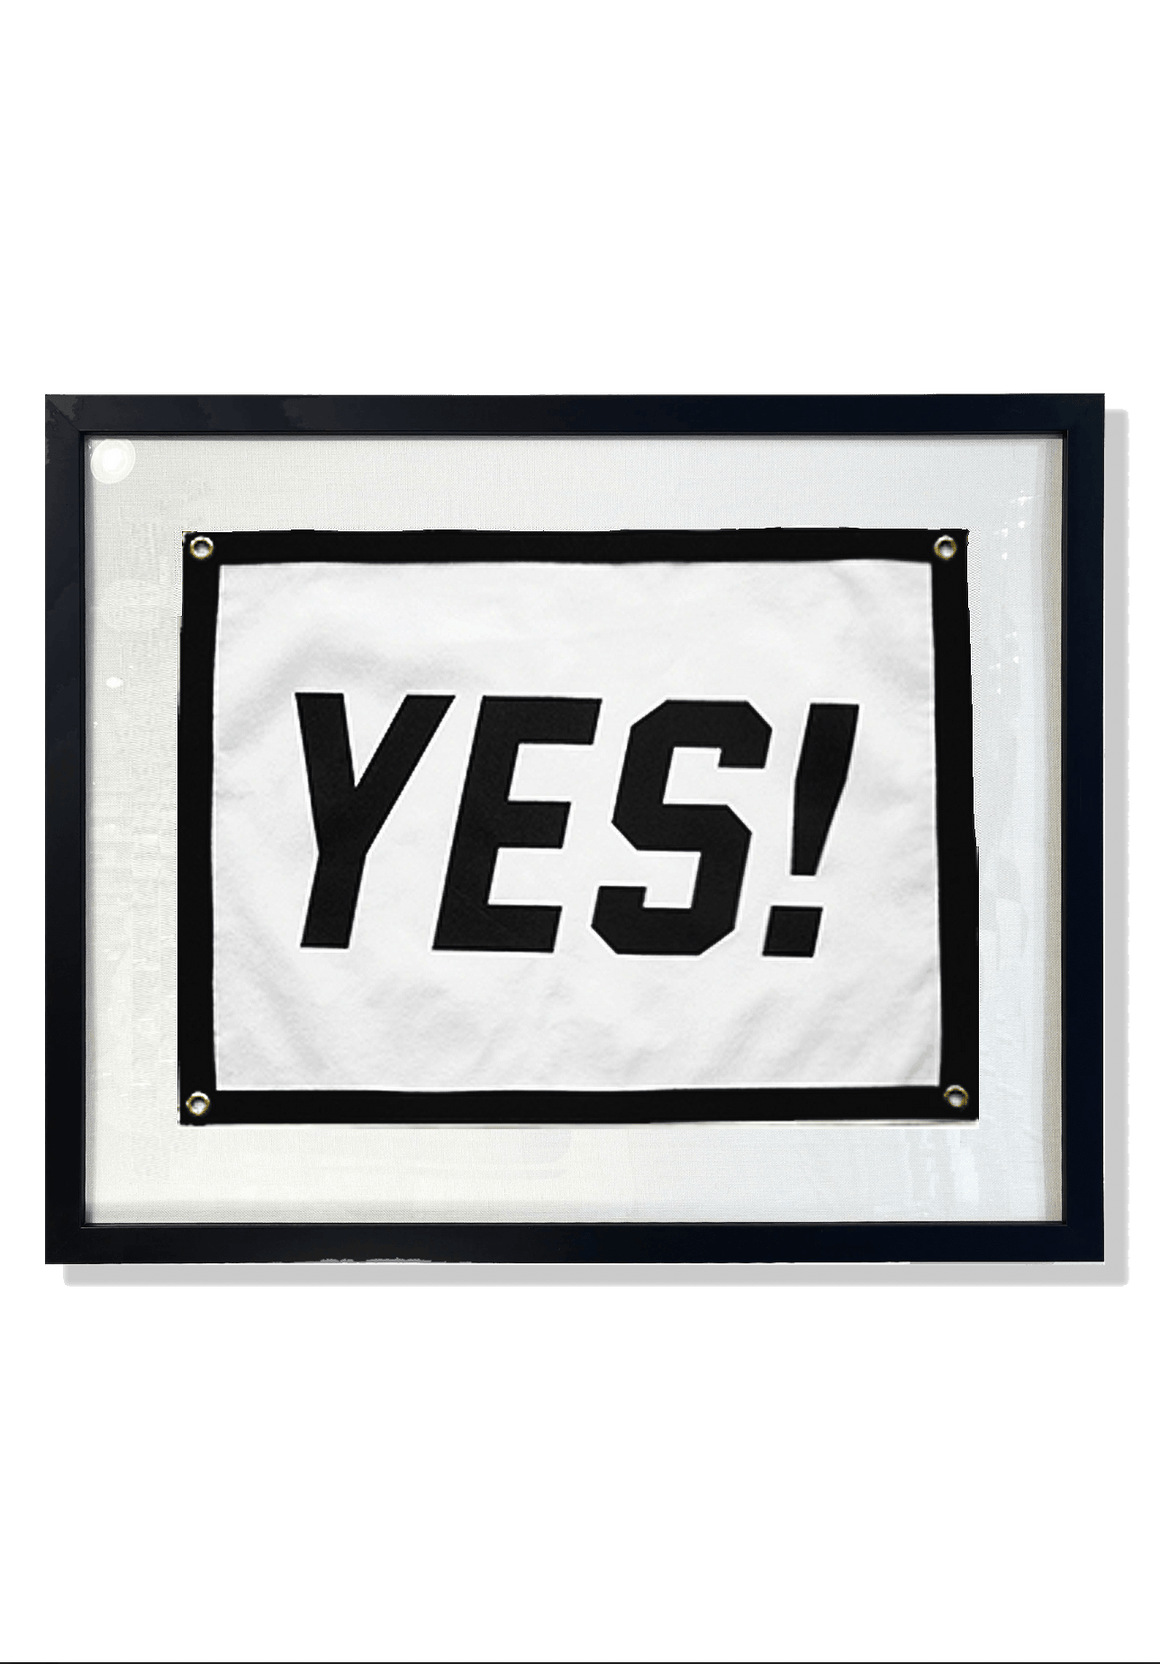 "Yes" Cut-And-Sewn Wool Felt Pennant Flag - Bensgarden.com